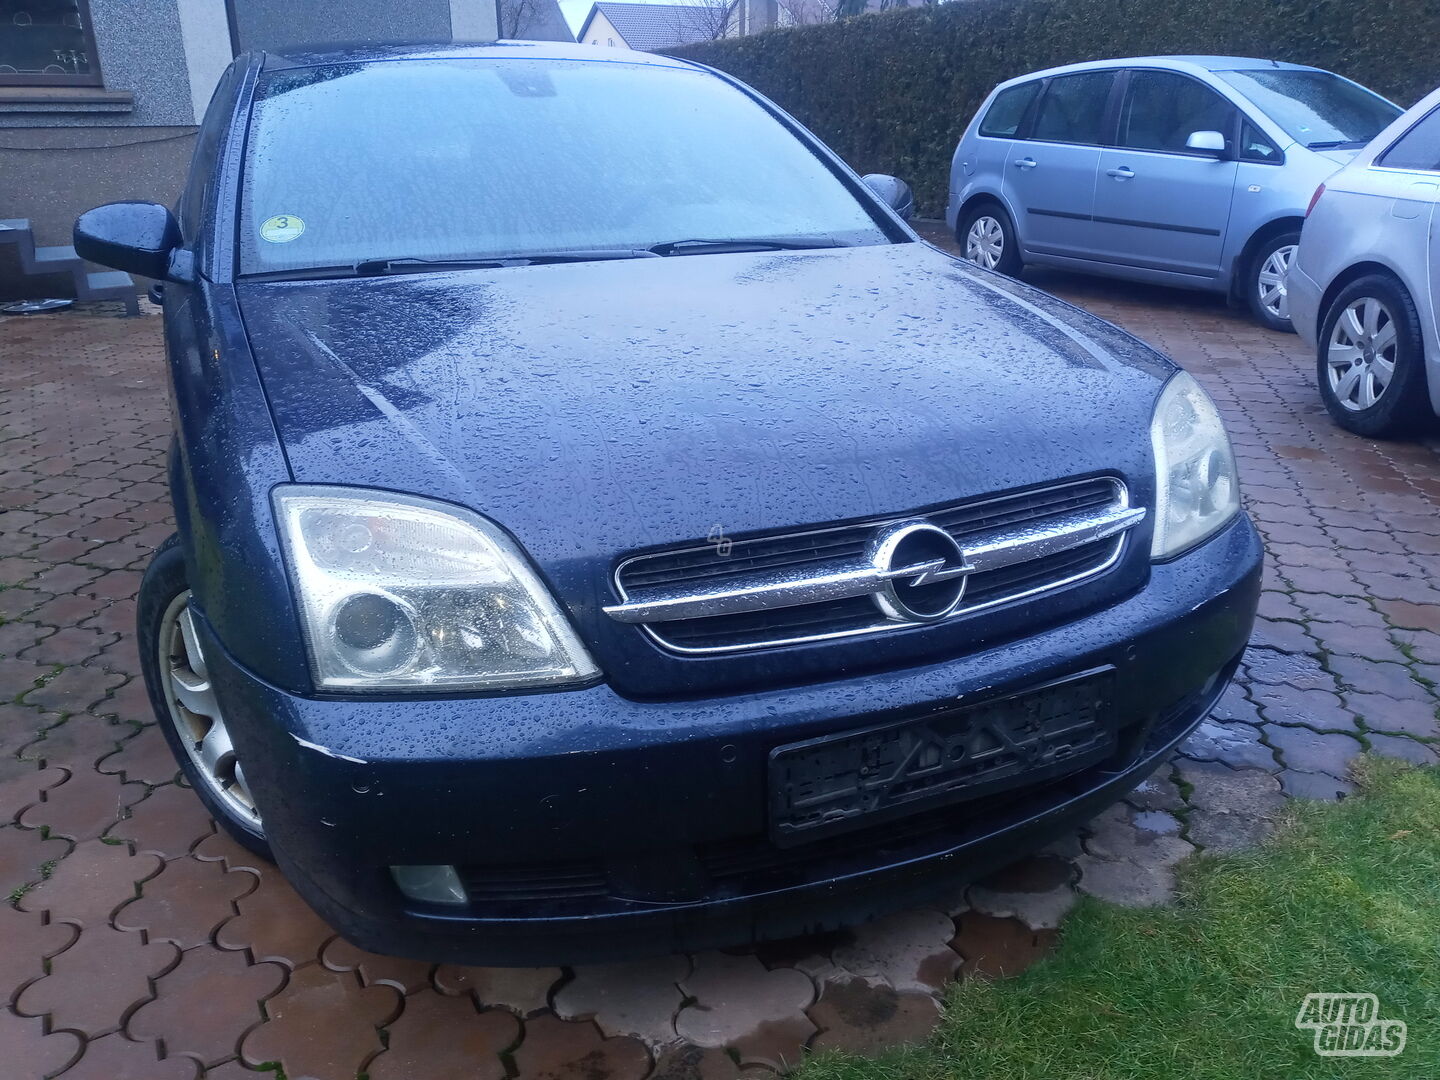 Opel Vectra 2003 m dalys